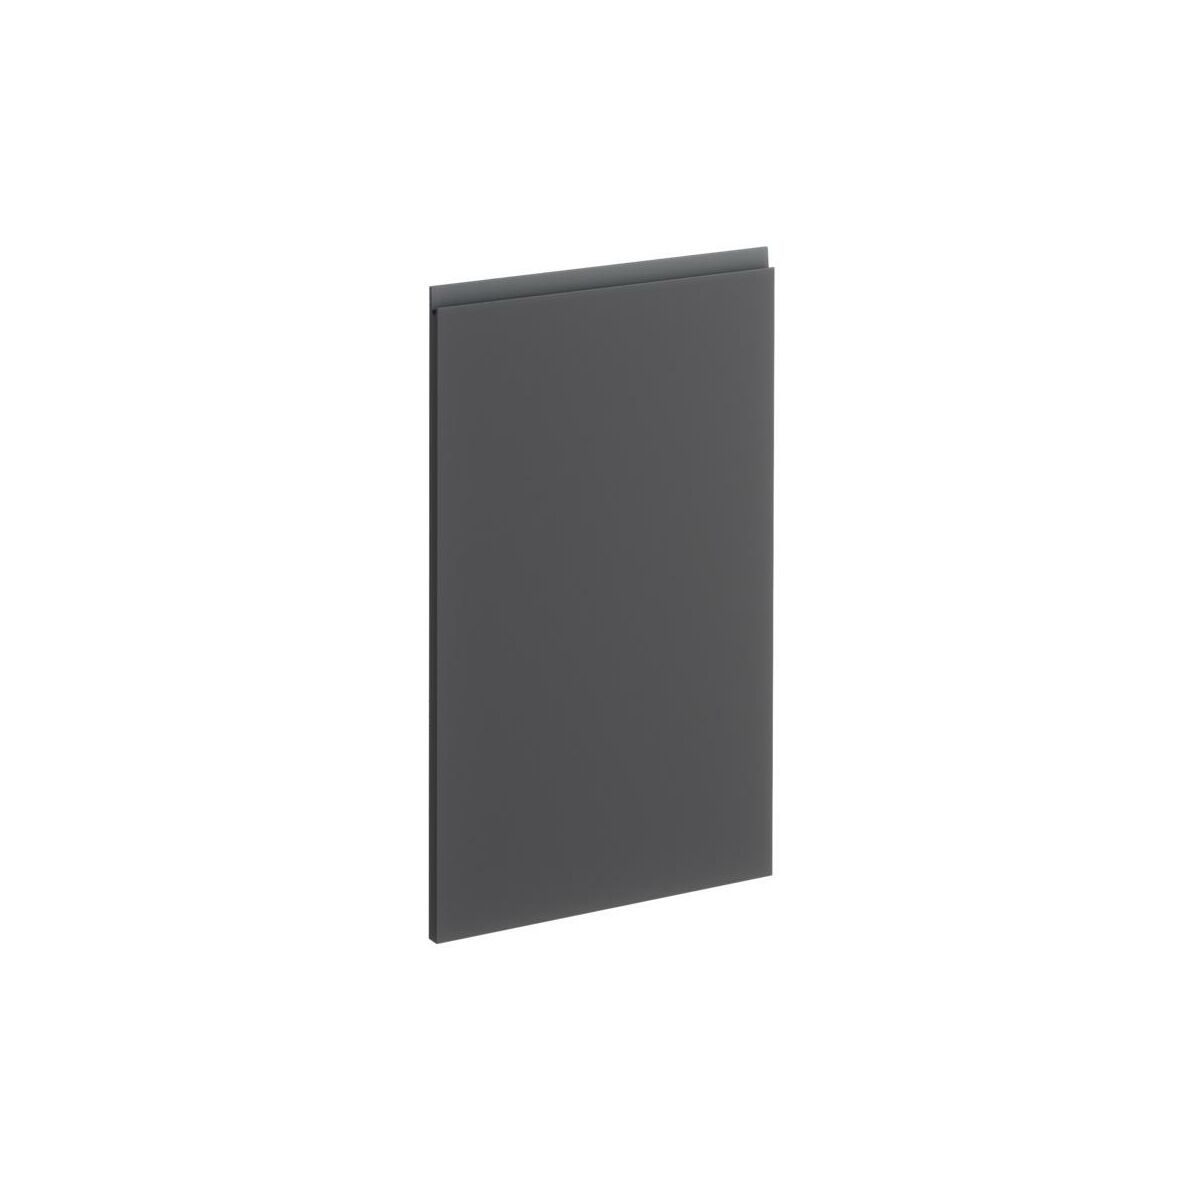 Panel zmywarki Aspen II 45 cm kolor szary